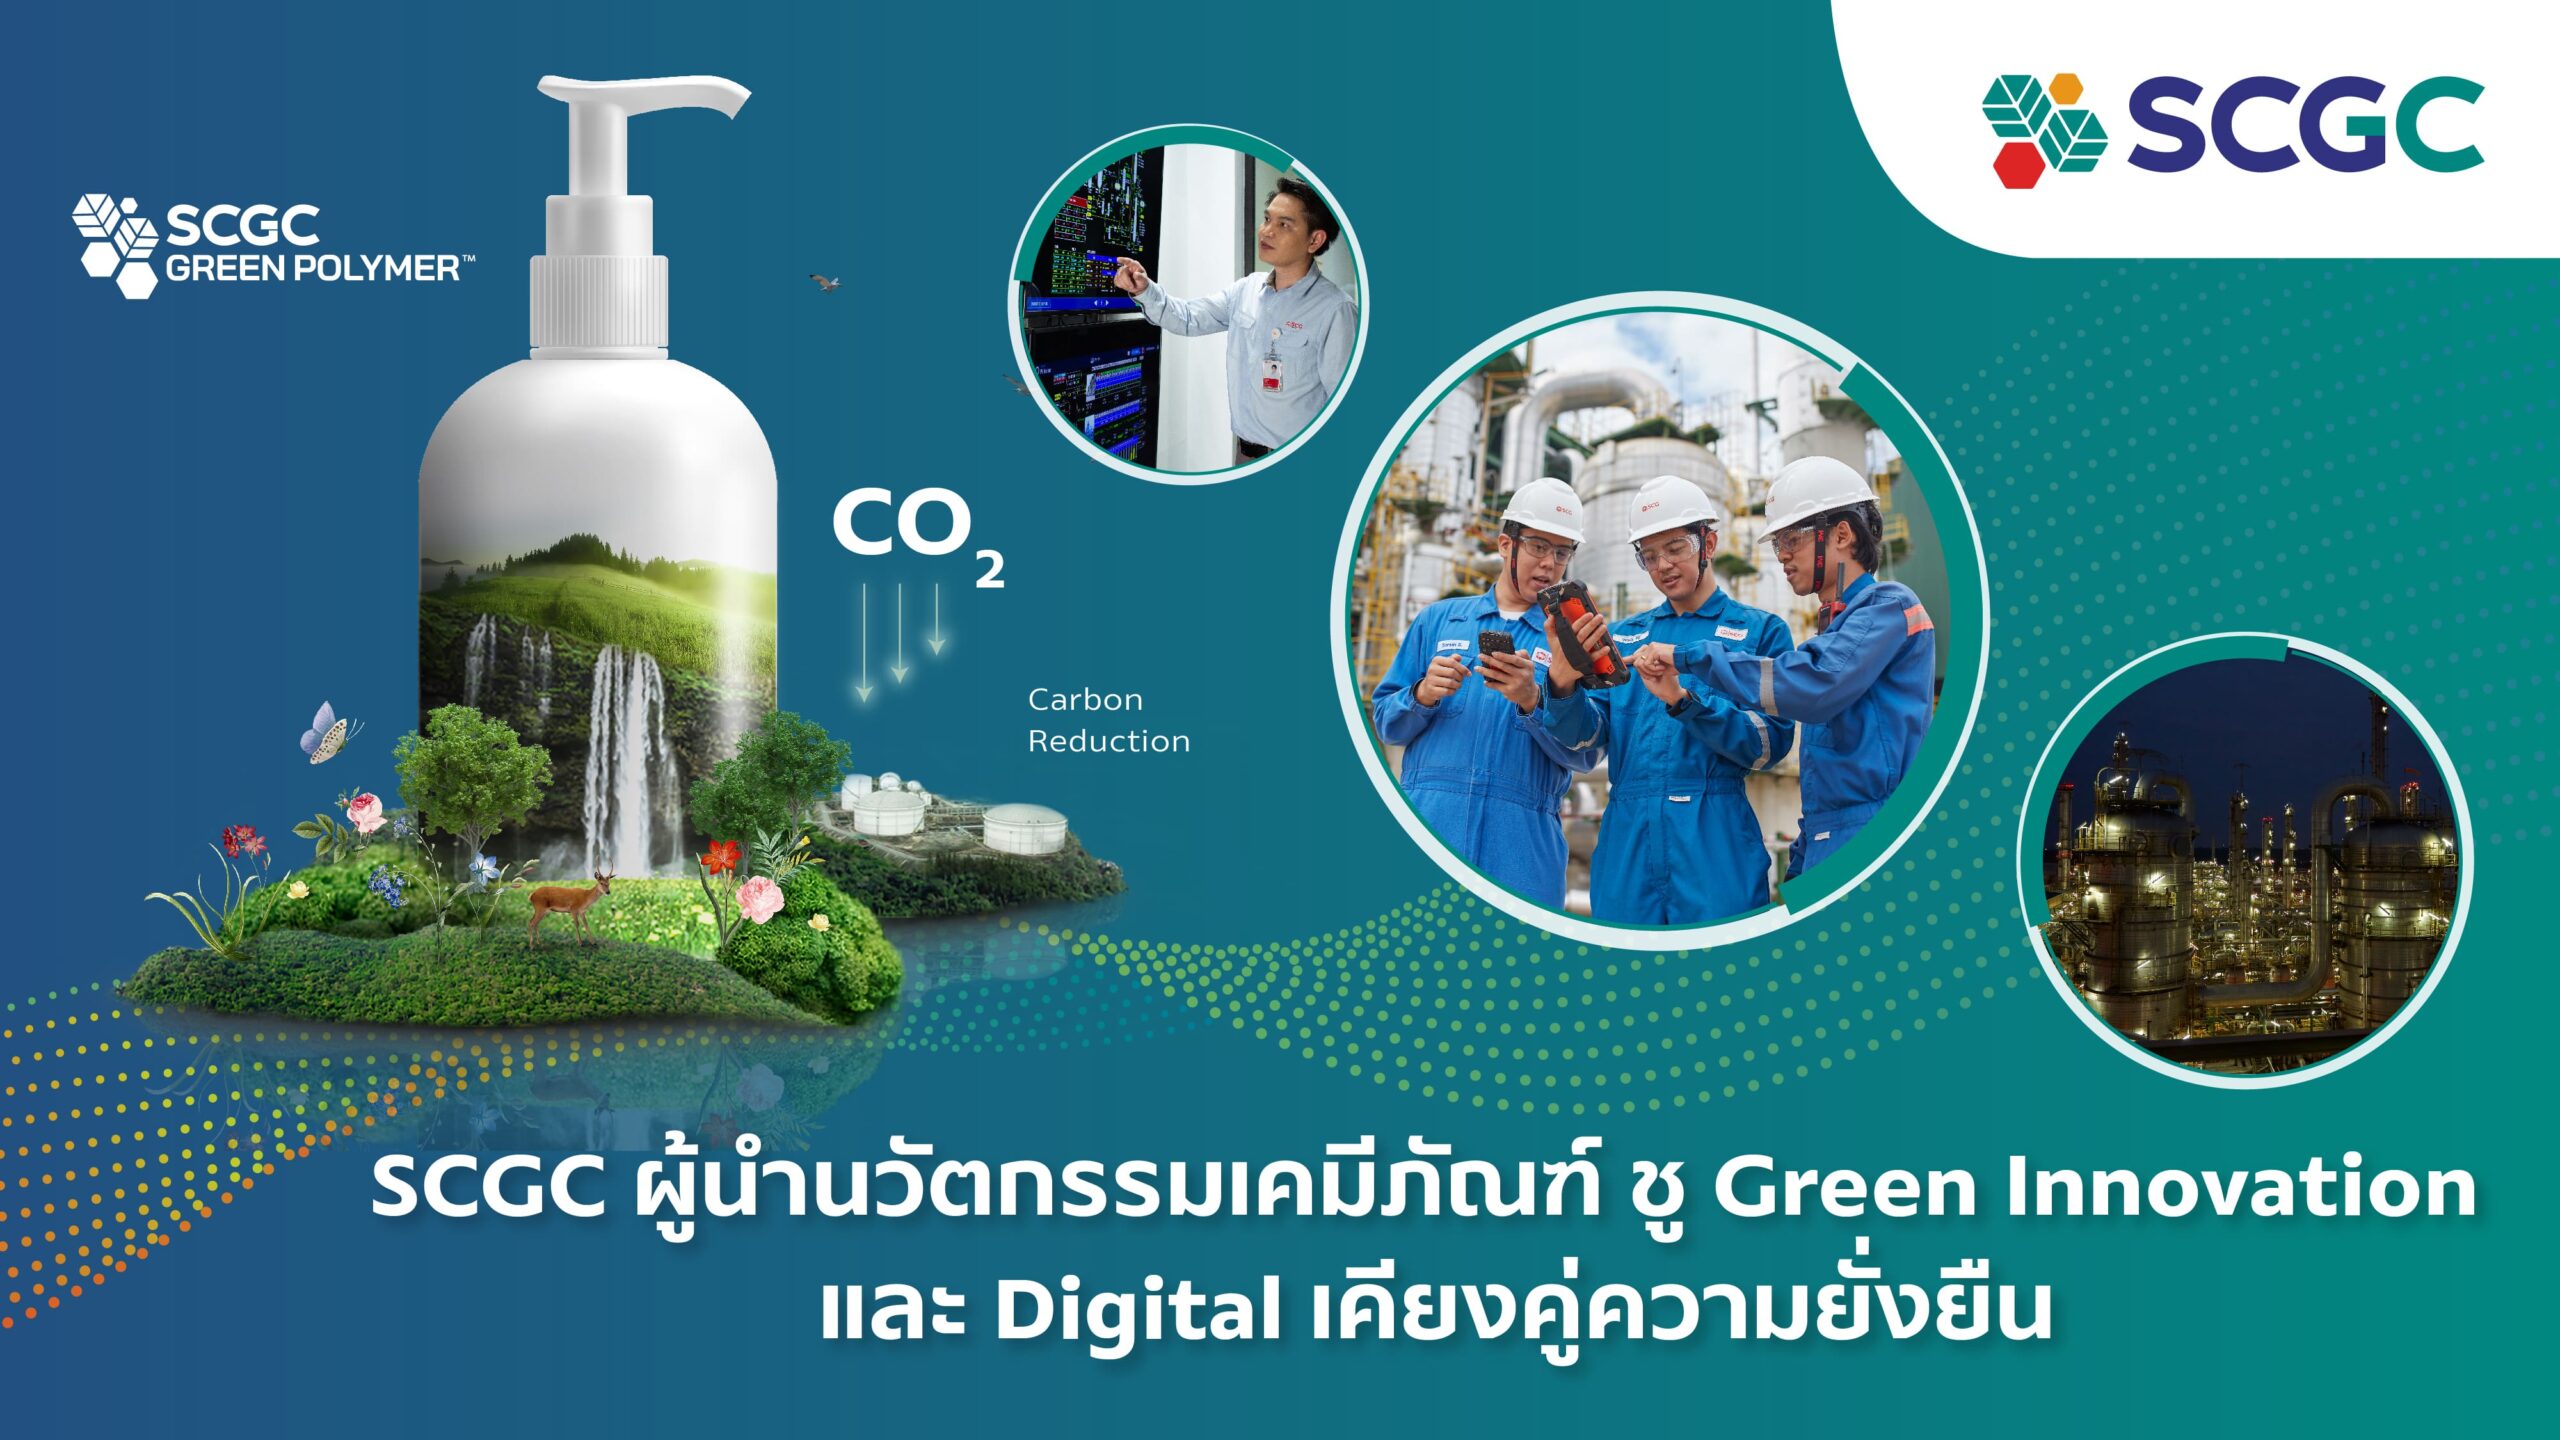 SCGC ผู้นำนวัตกรรมเคมีภัณฑ์ ชู Green Innovation และ Digital เคียงคู่ความยั่งยืน